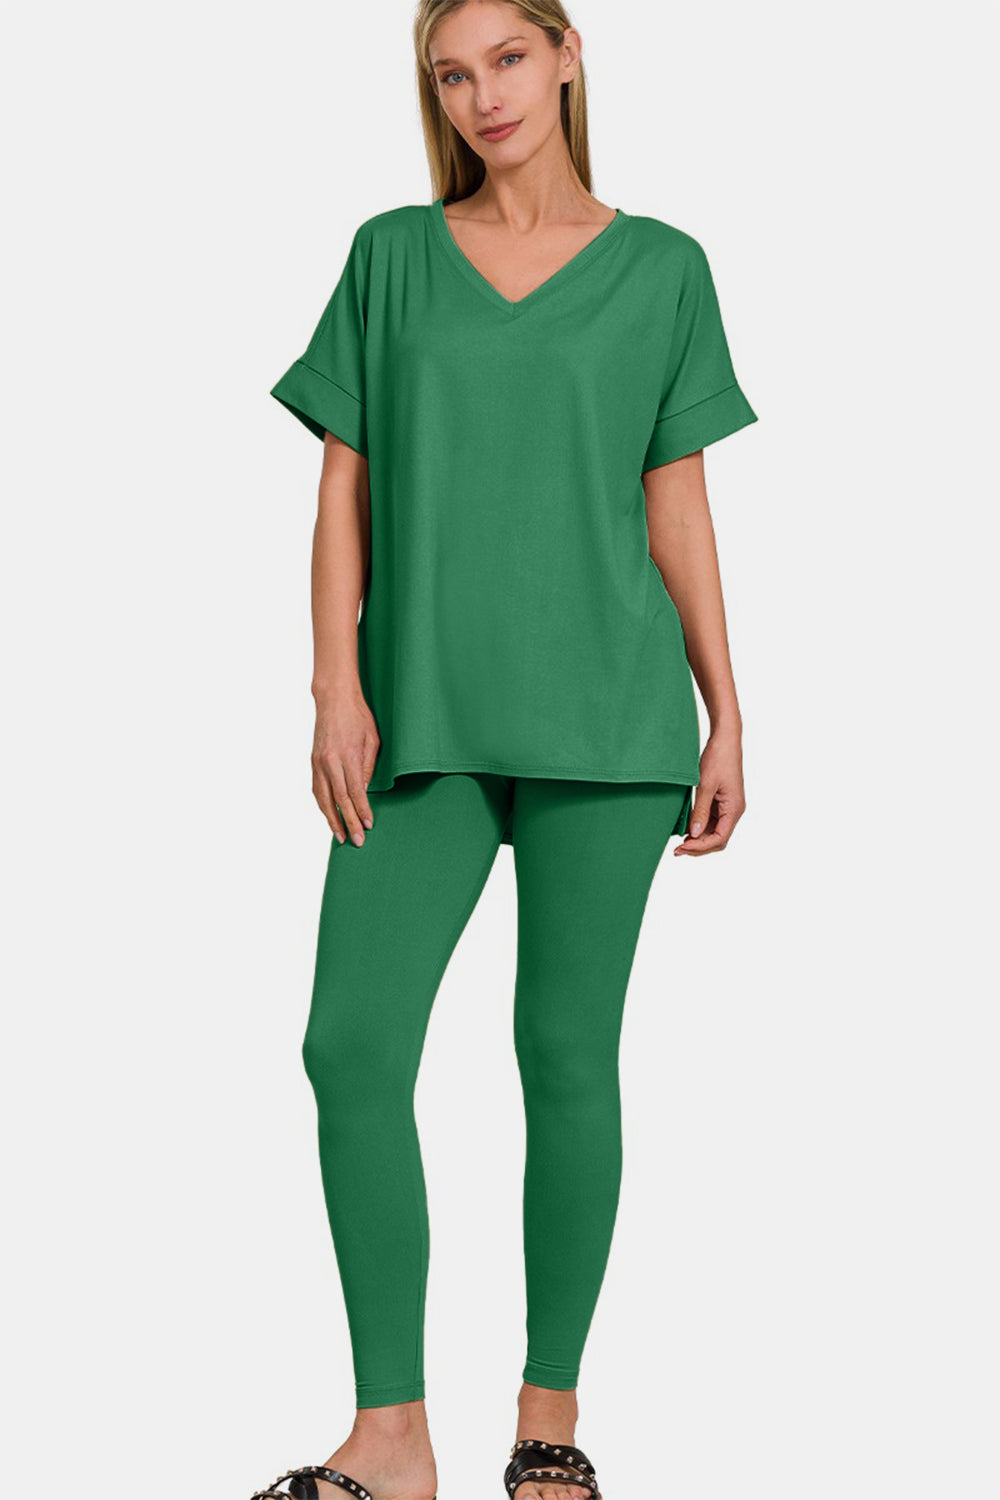 Zenana Forest Green V-Neck Rolled Short Sleeve T-Shirt and Leggings Lounge Set Trendsi